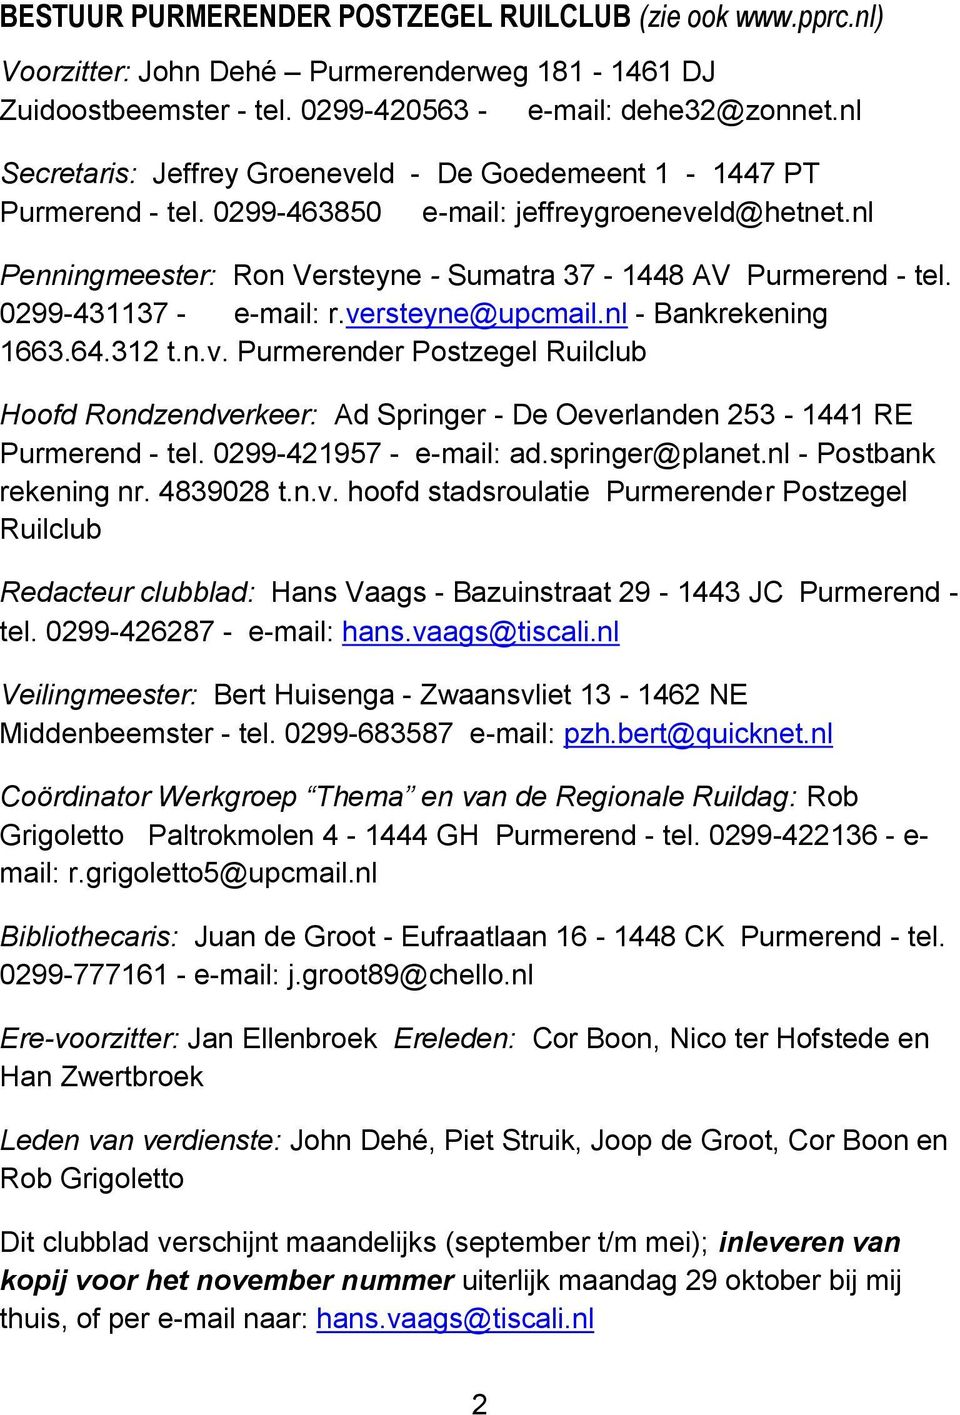 0299-431137 - e-mail: r.versteyne@upcmail.nl - Bankrekening 1663.64.312 t.n.v. Purmerender Postzegel Ruilclub Hoofd Rondzendverkeer: Ad Springer - De Oeverlanden 253-1441 RE Purmerend - tel.